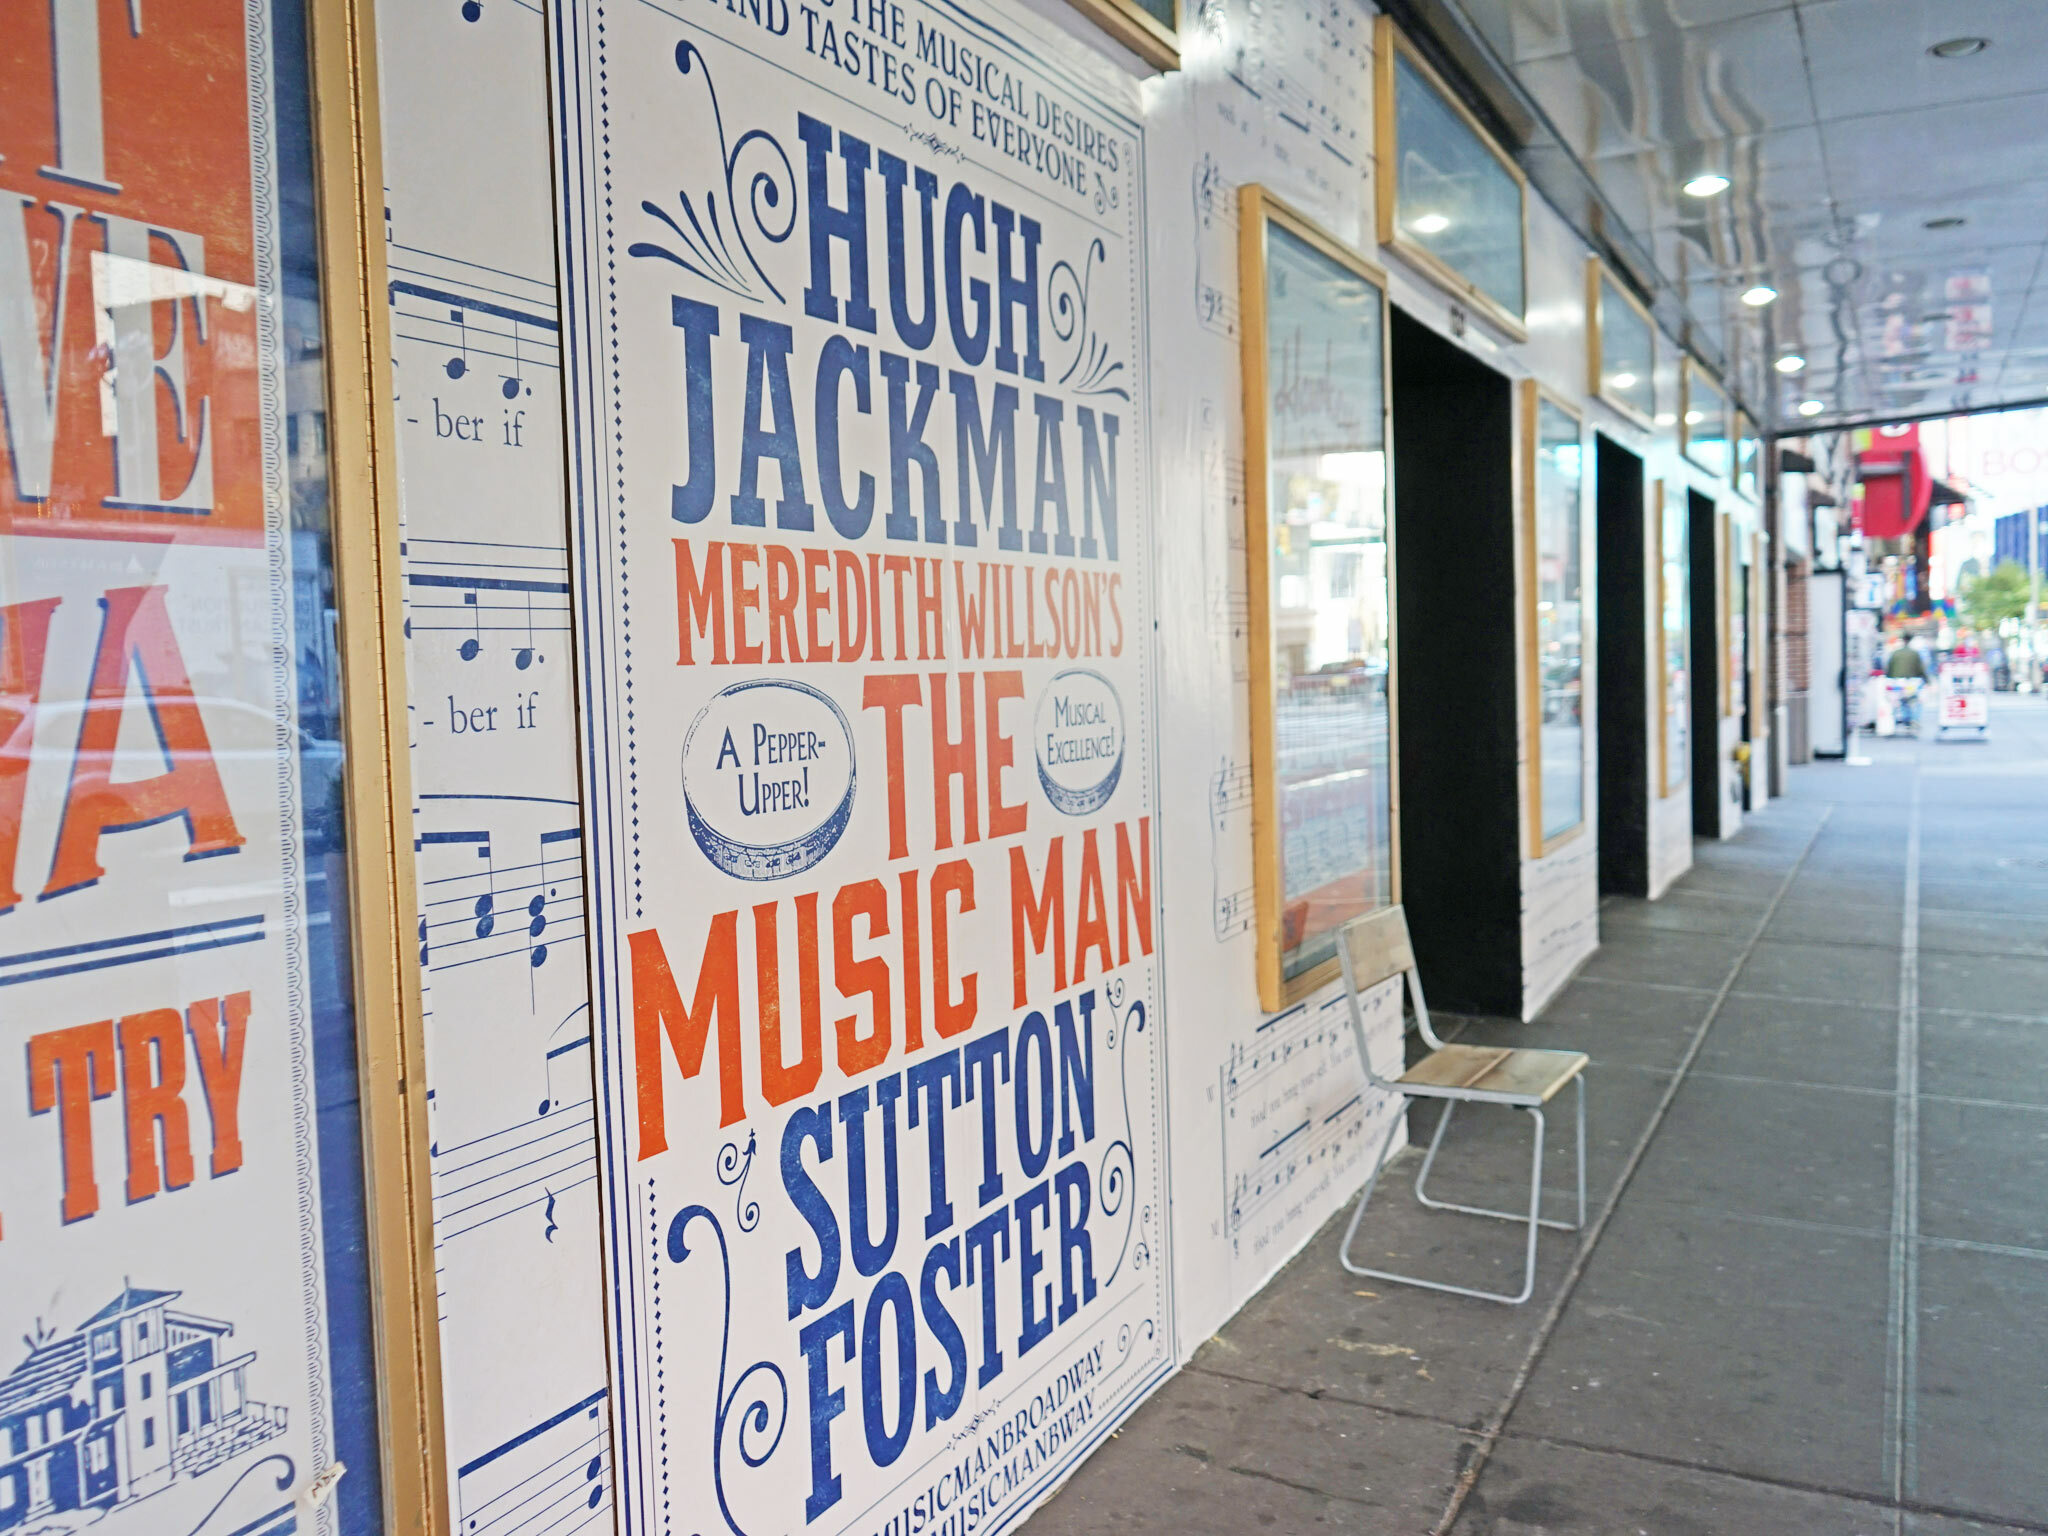 Music Man on Broadway